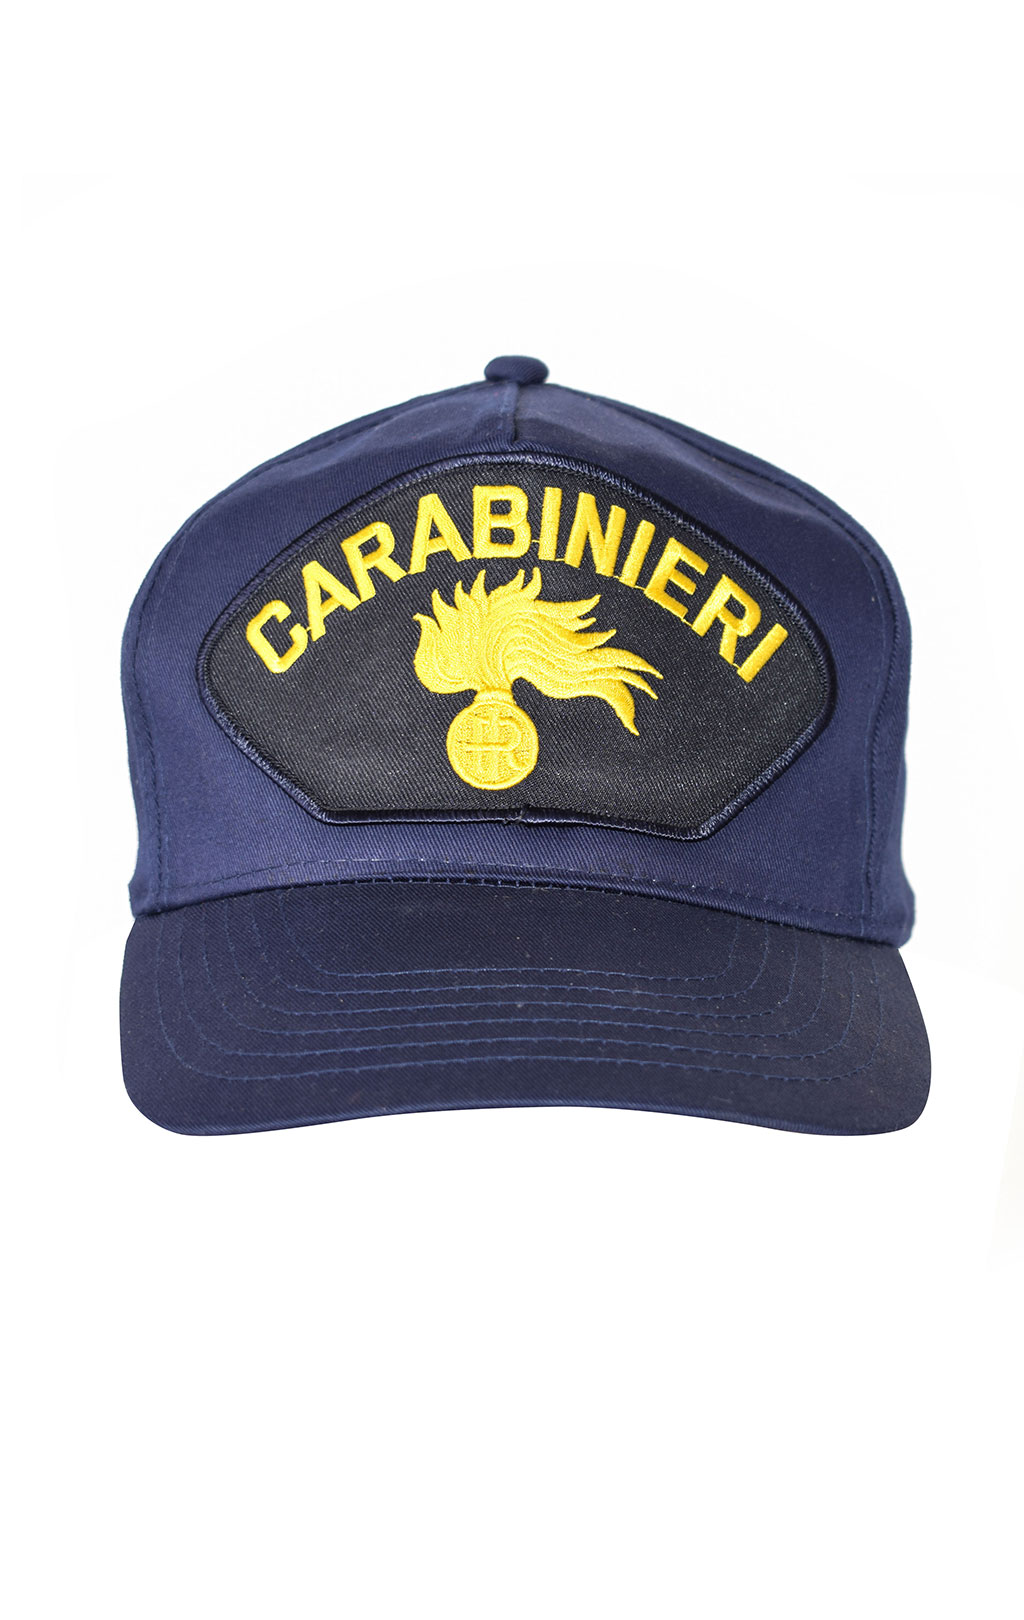 Бейсболка армейская CARABINIERI dark blue Италия